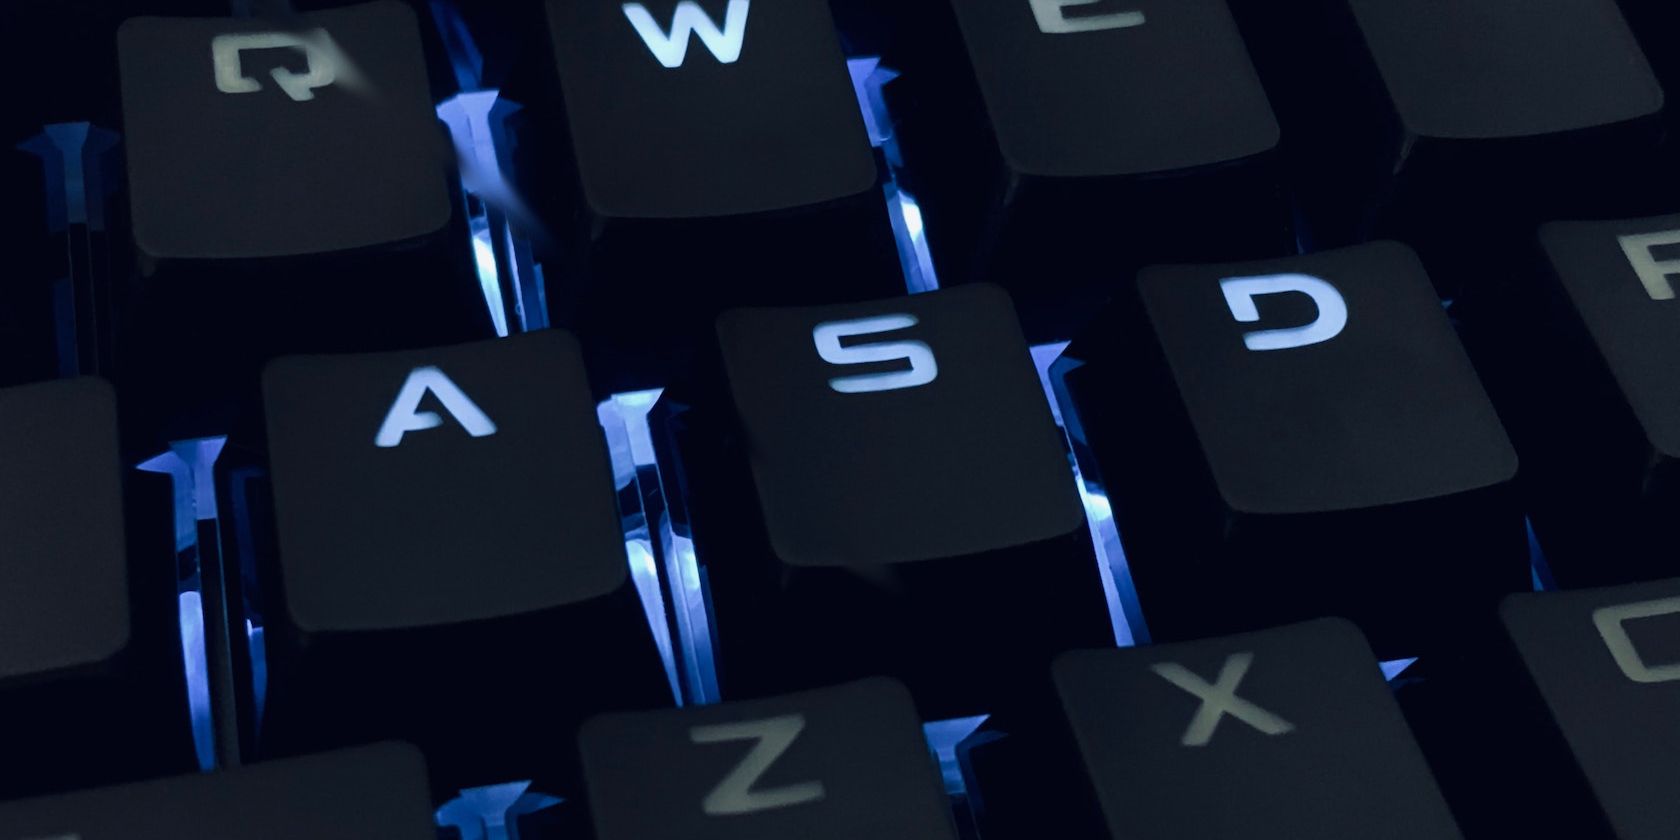 a keyboard close up